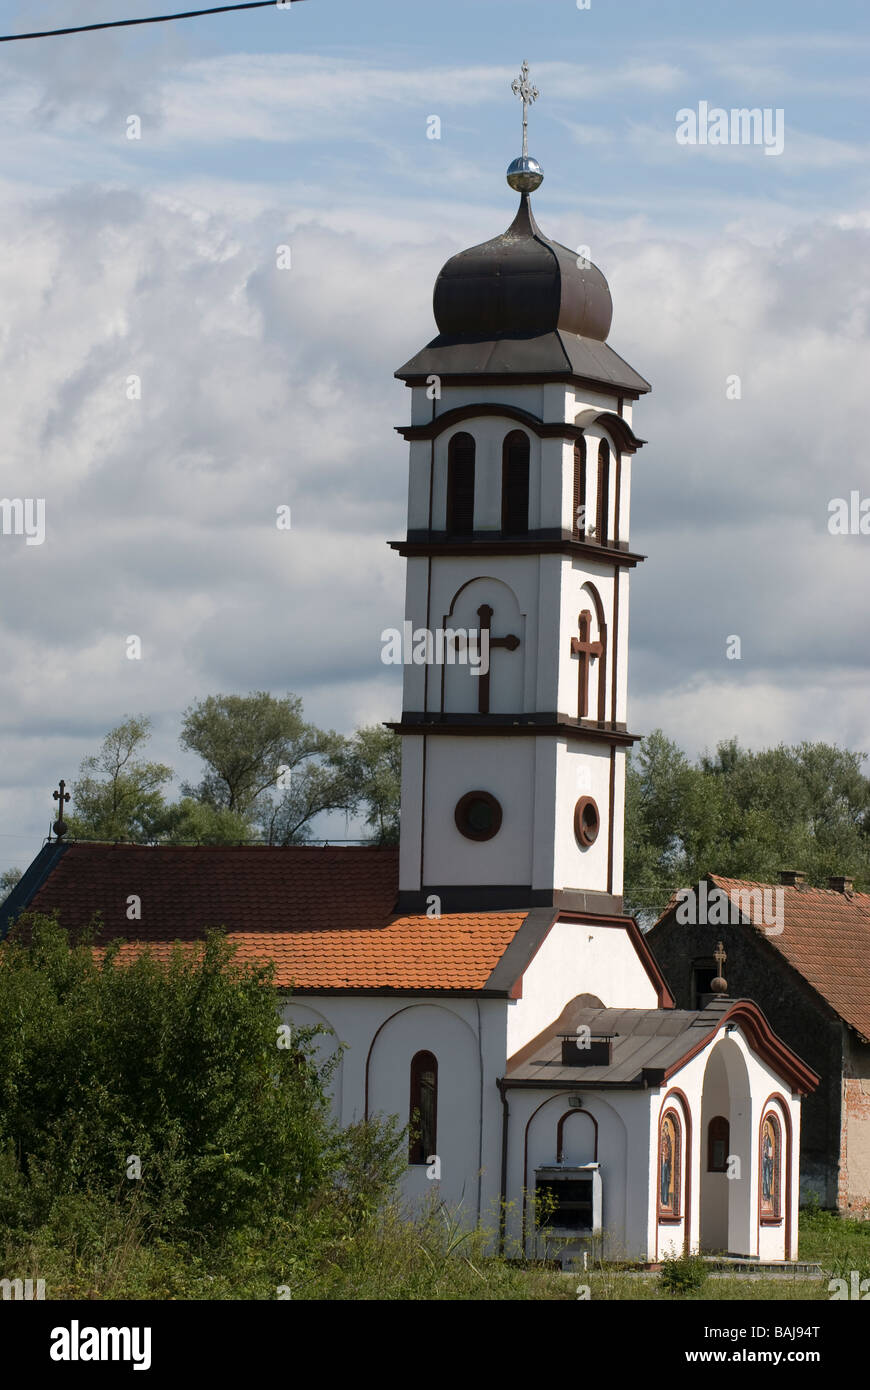 Tower of Christian church in Srpska Bosnia Eastern Europe Stock Photo